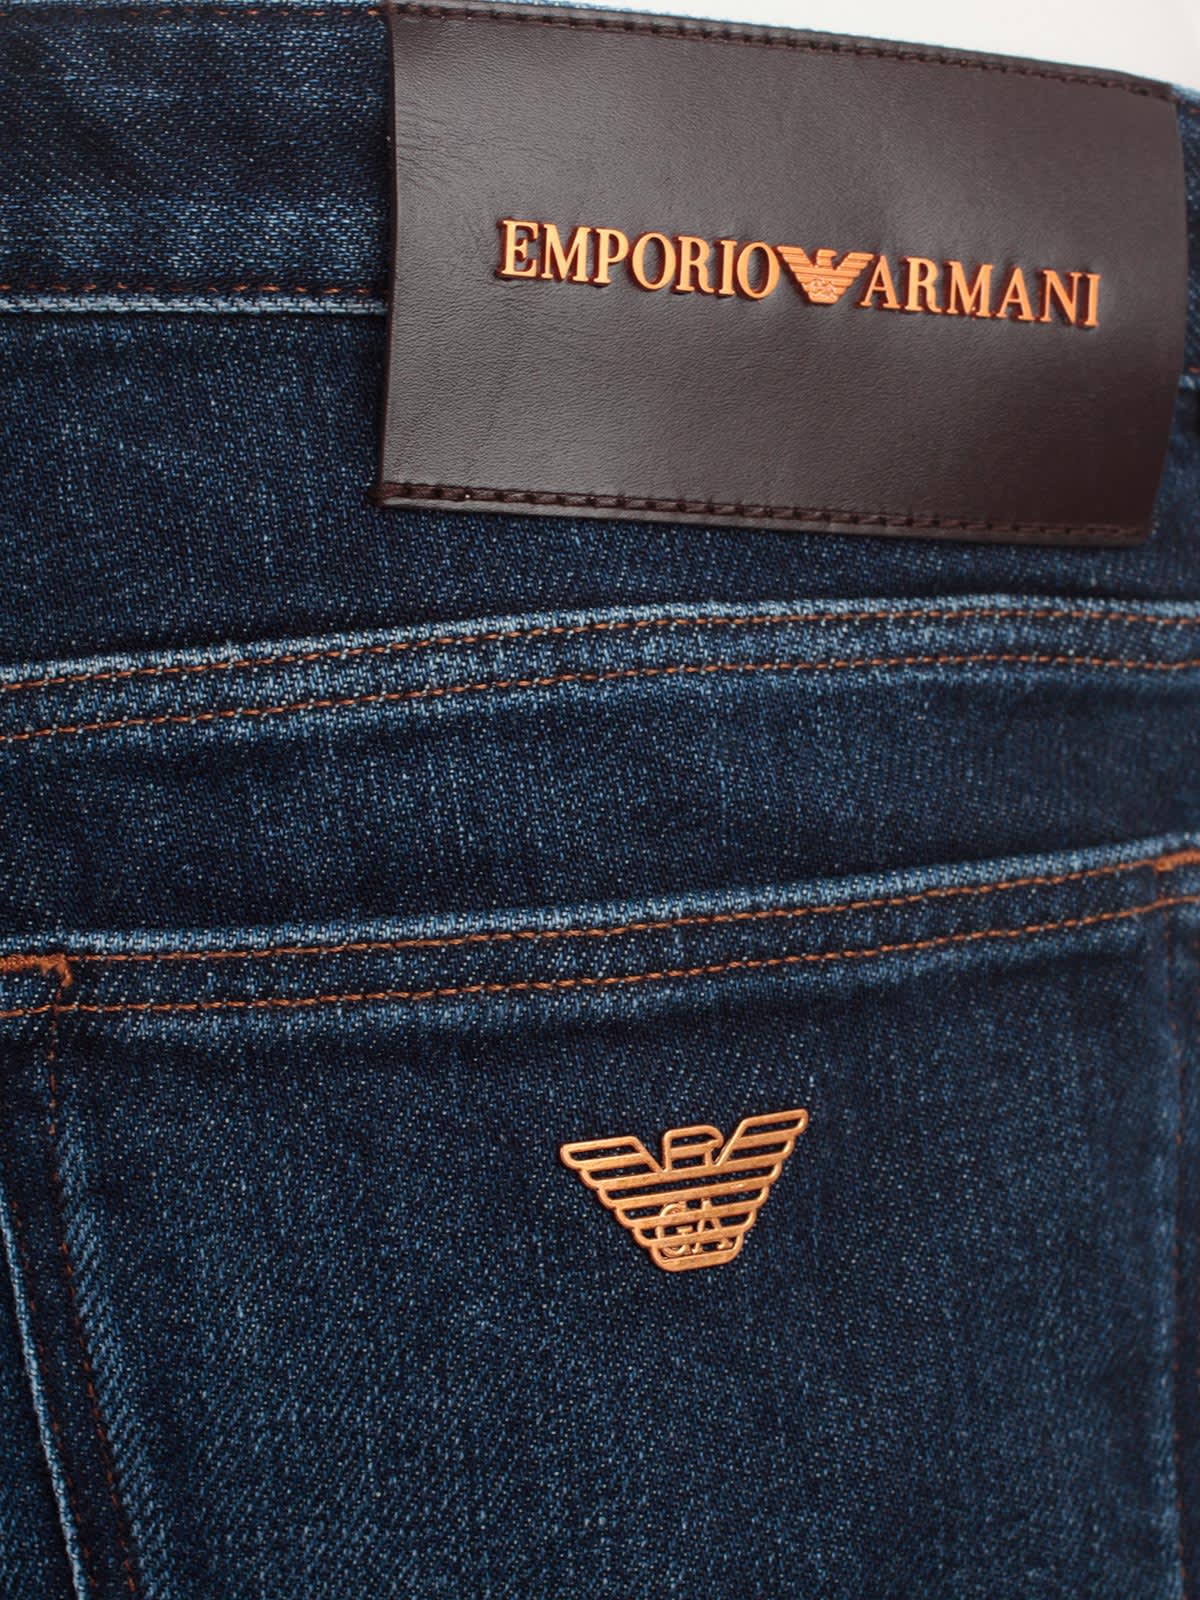 Emporio Armani Jeans Flash Sales, SAVE 40% 